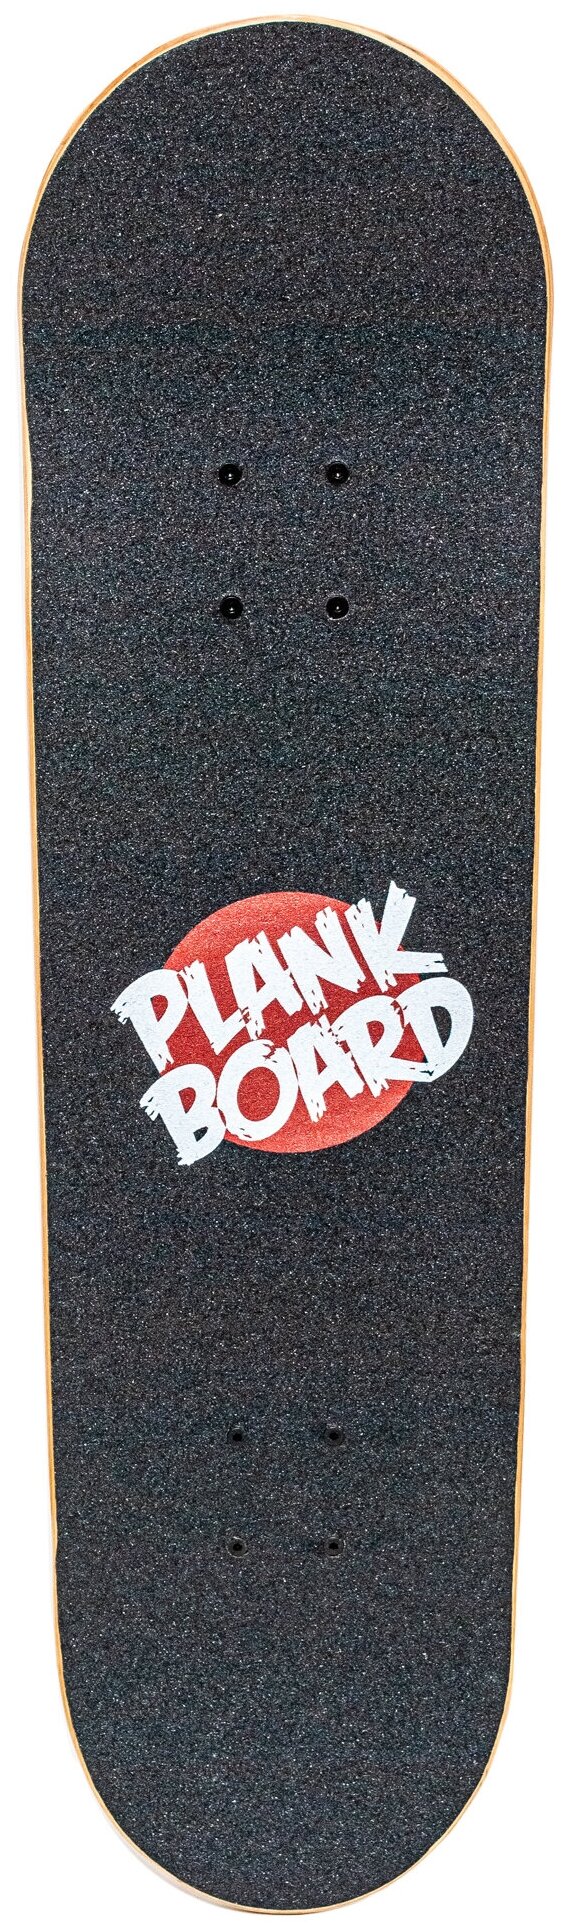 Plank - фото №3